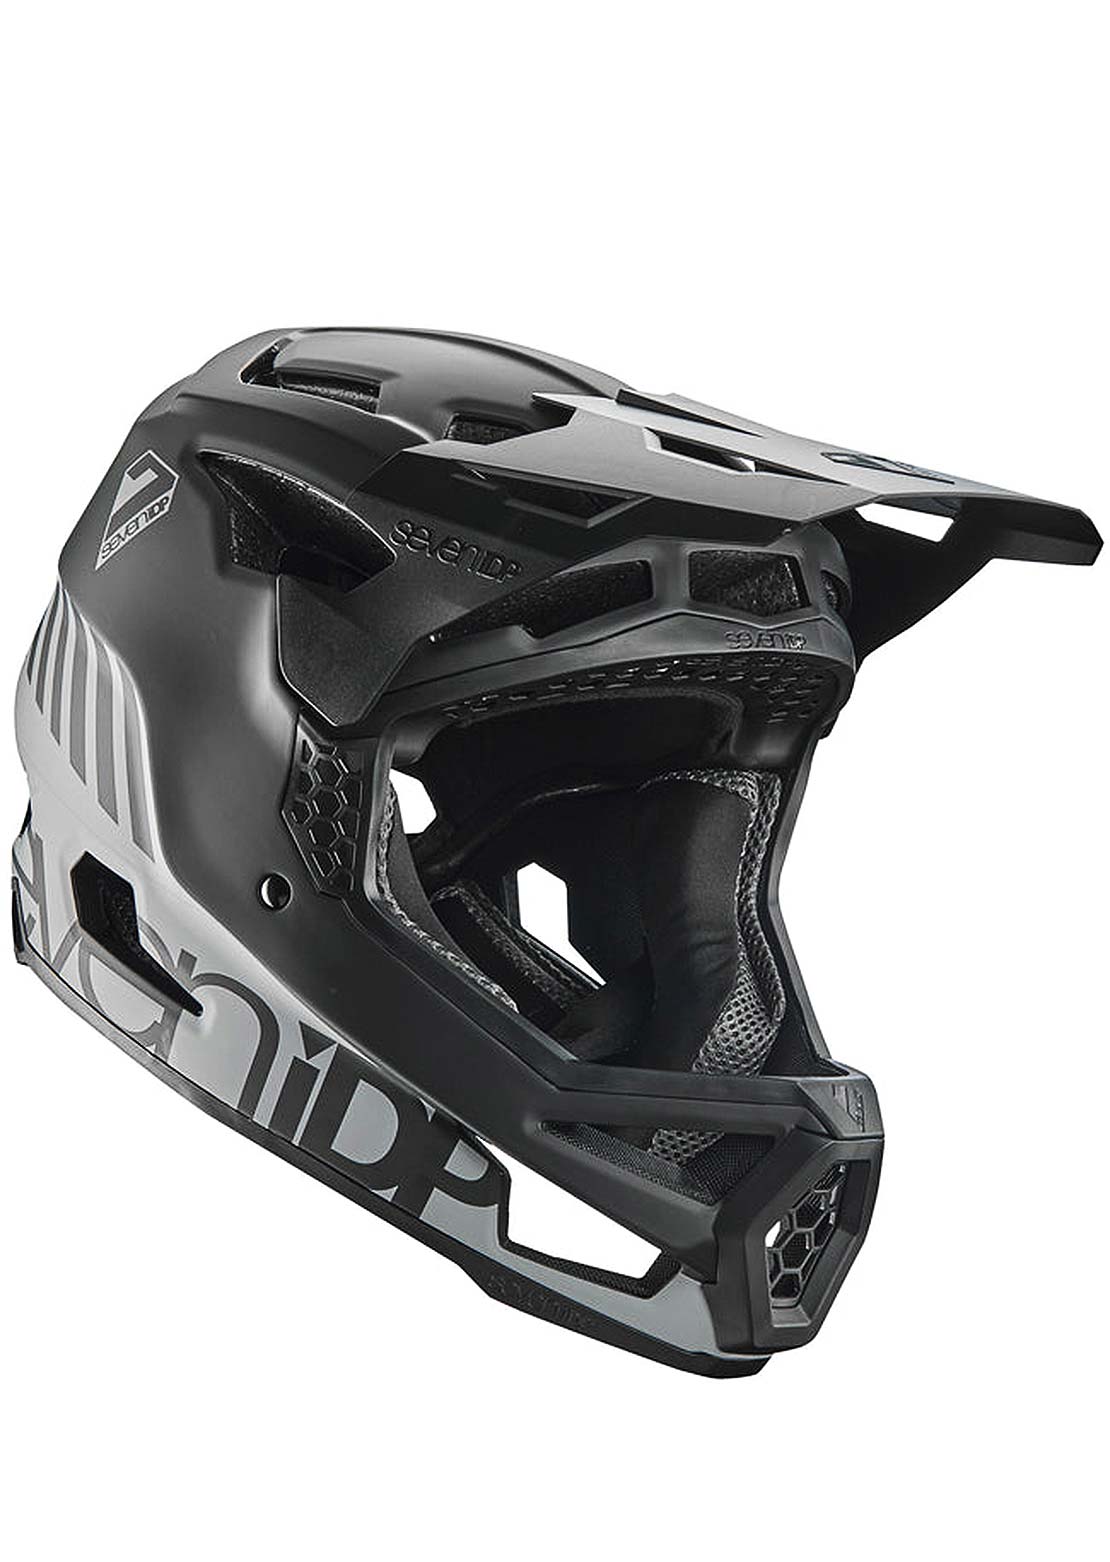 7iDP Project 23 Fiber Glass Downhill Helmet 61 - 62cm Graphite/Black